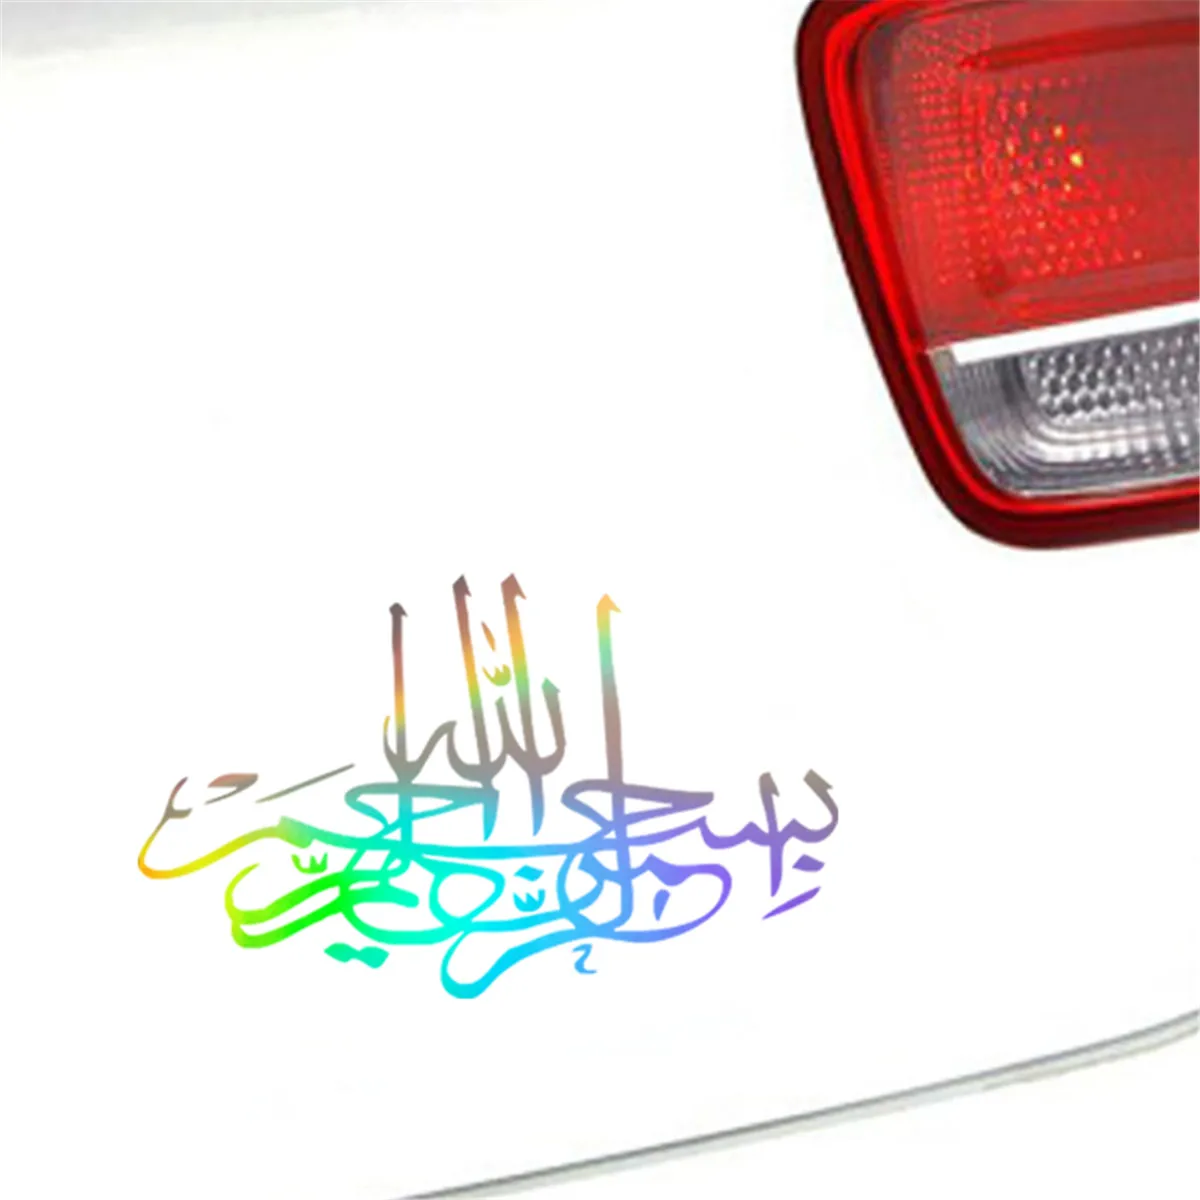 MASHA ALLAH GOD WILL MUSLIM ISLAM Decal Sticker Car Truck Motorcycle Window Ipad